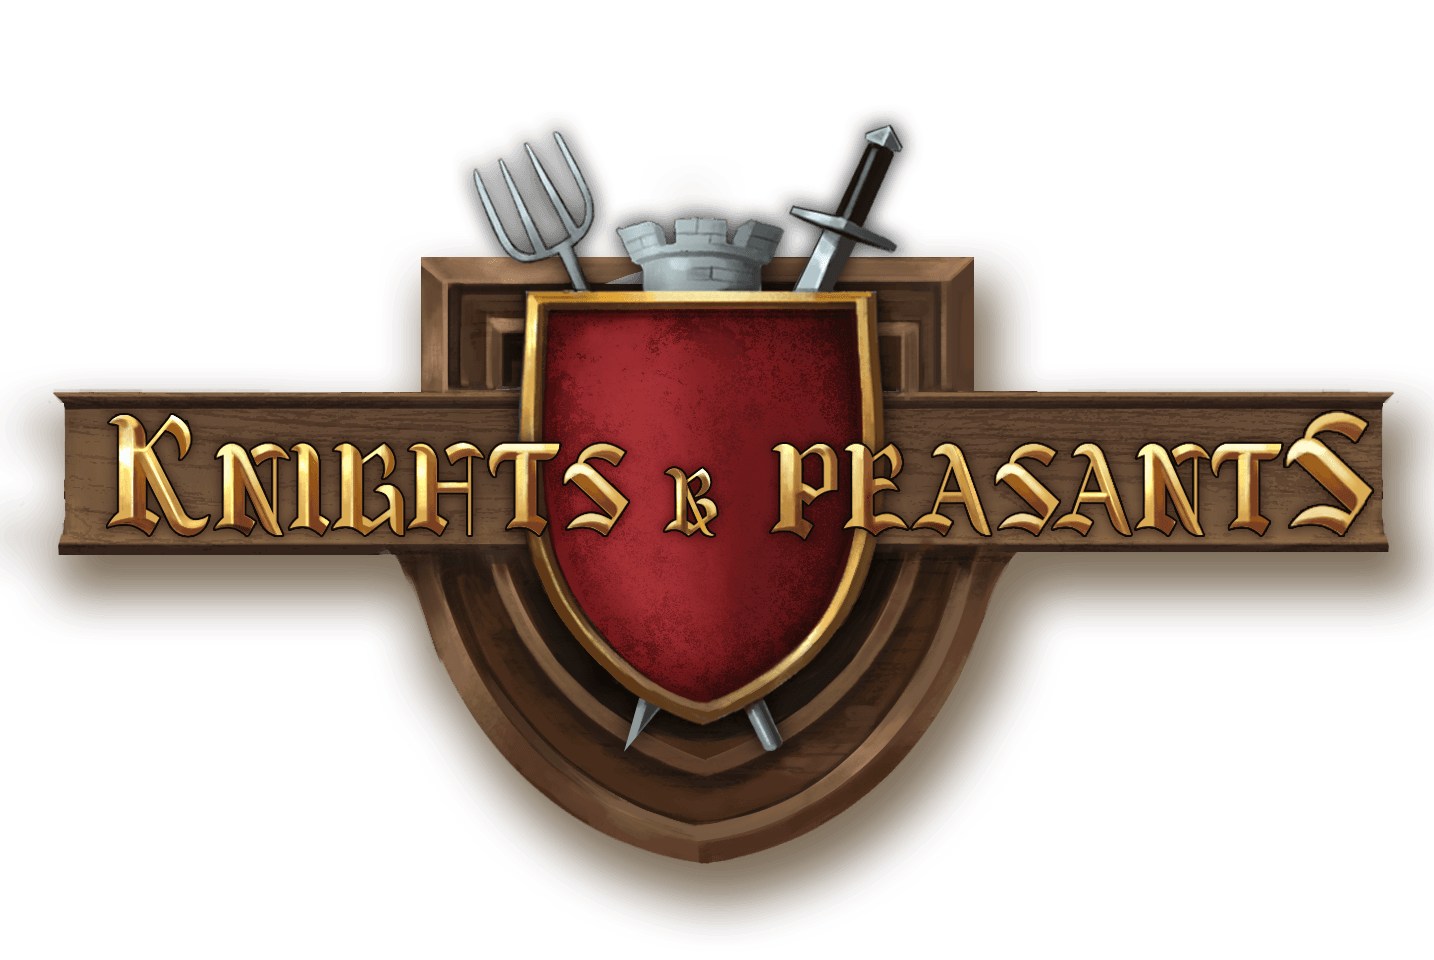 Knights and Peasants